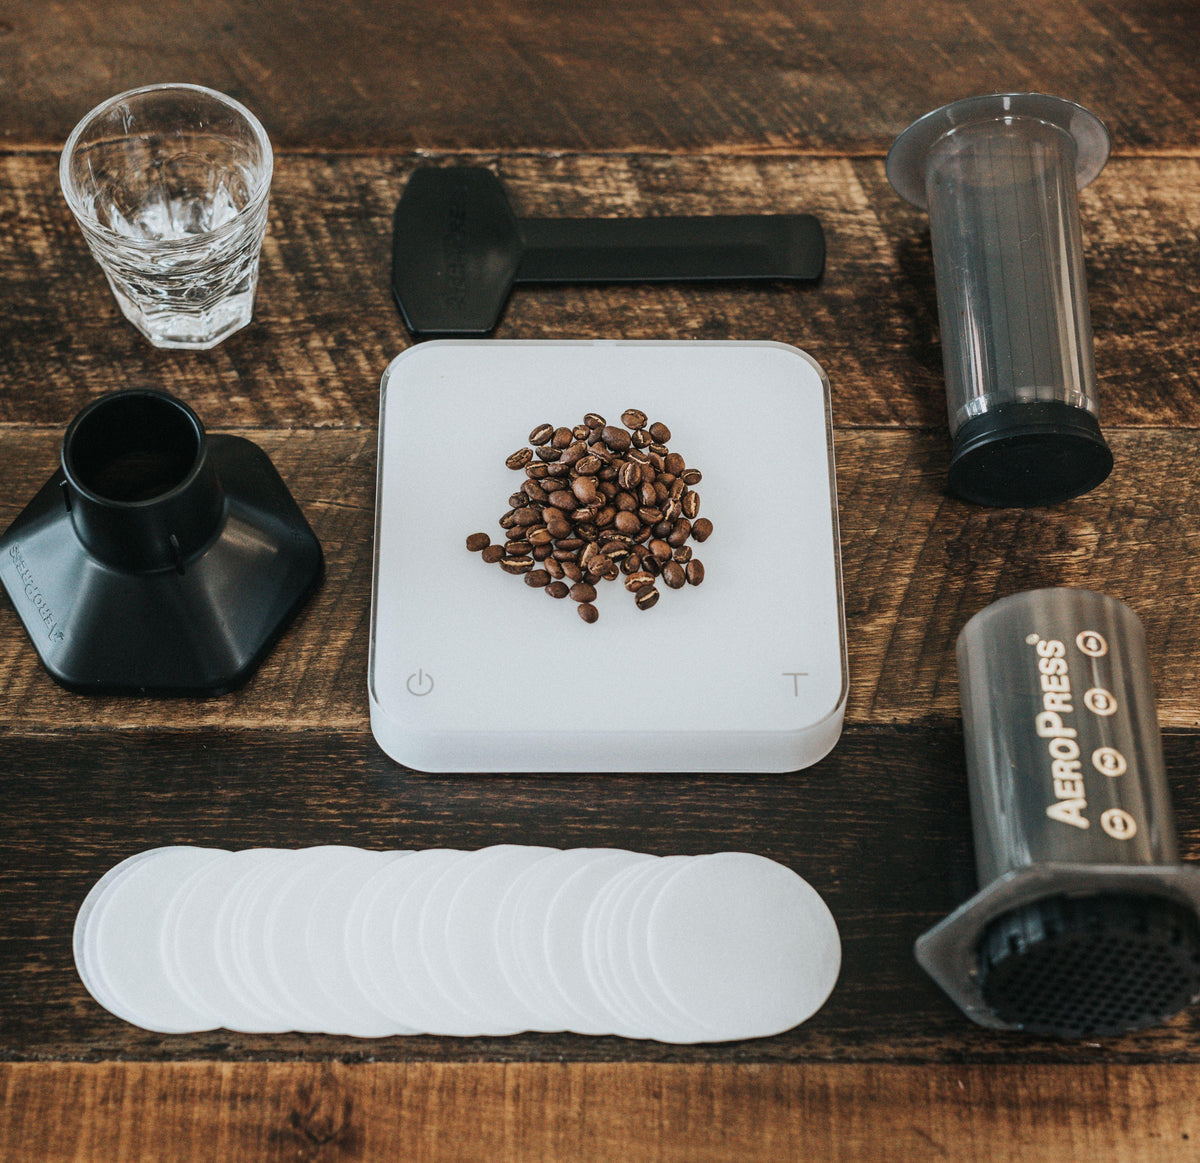 Aero Press Coffee Maker - Bean Hoppers